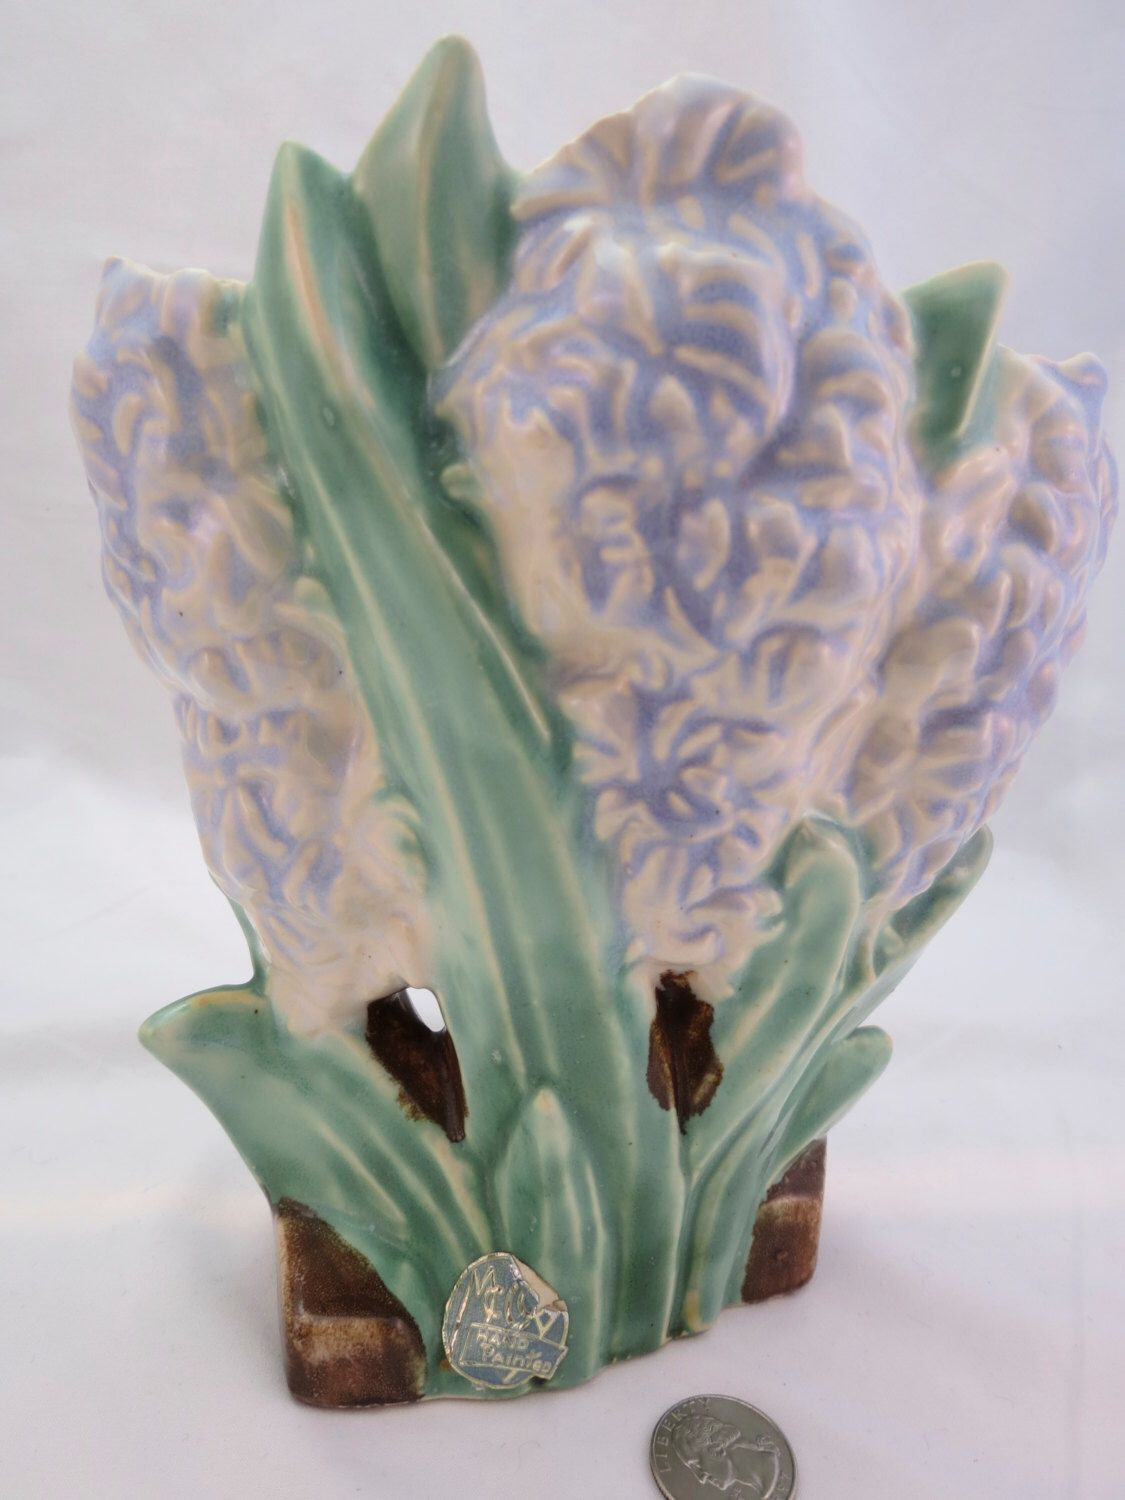 hyacinth in glass vase of vintage mccoy blue hyacinth vase c 1950 by mccoypotterylovers on regarding vintage mccoy blue hyacinth vase c 1950 by mccoypotterylovers on etsy https